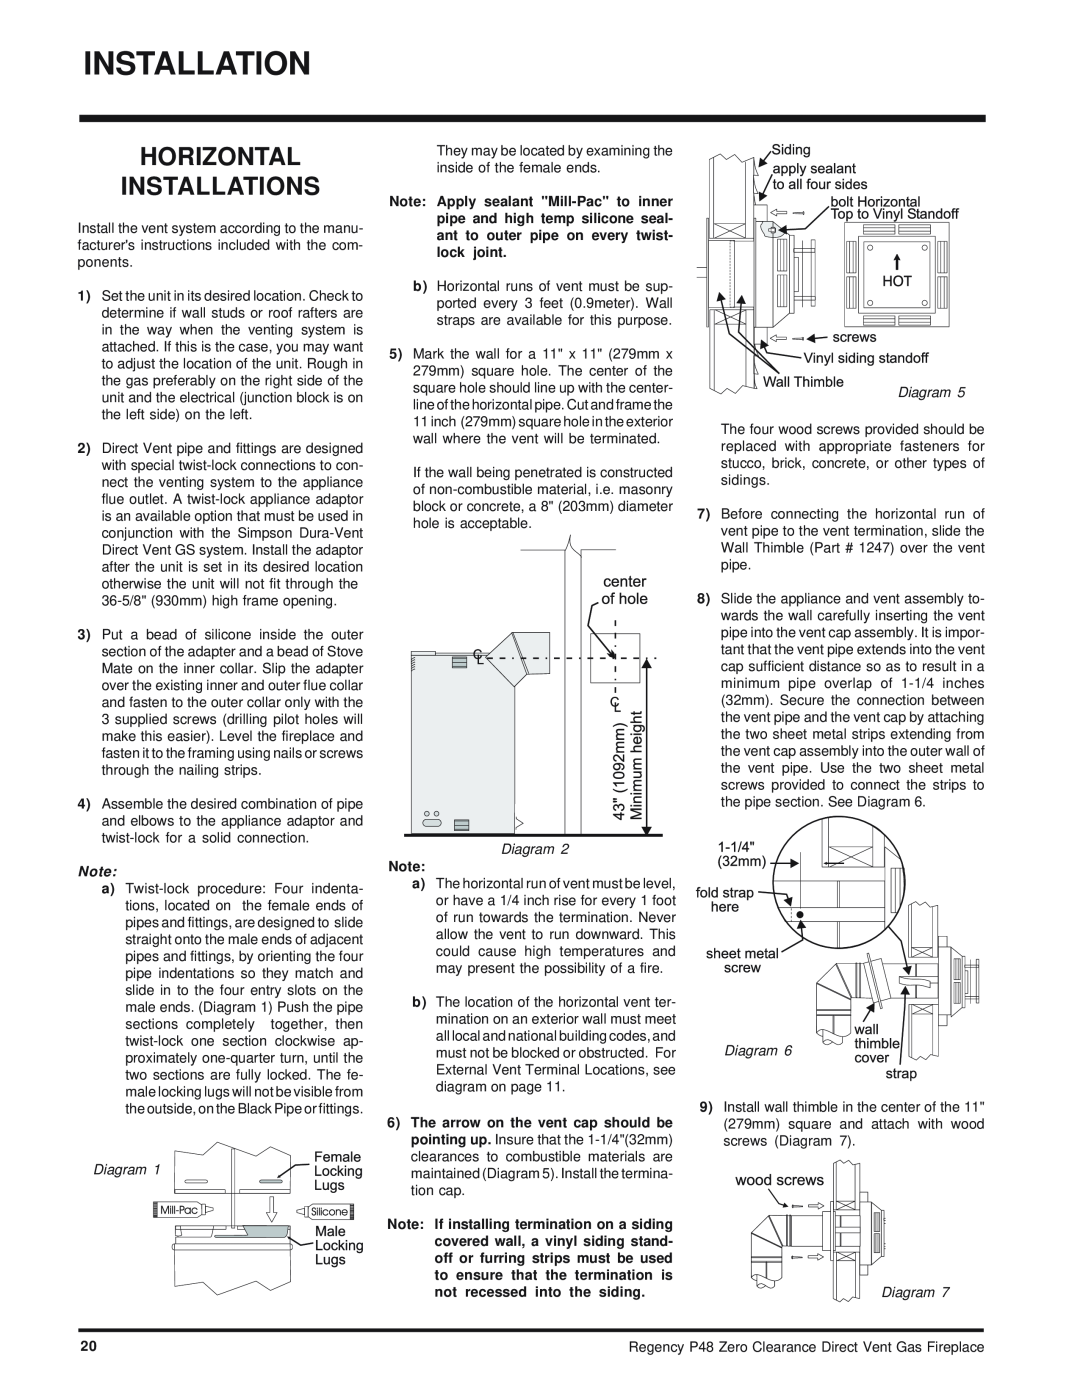 Regency P48-NG, P48-LP installation manual Horizontal Installations, Diagram 